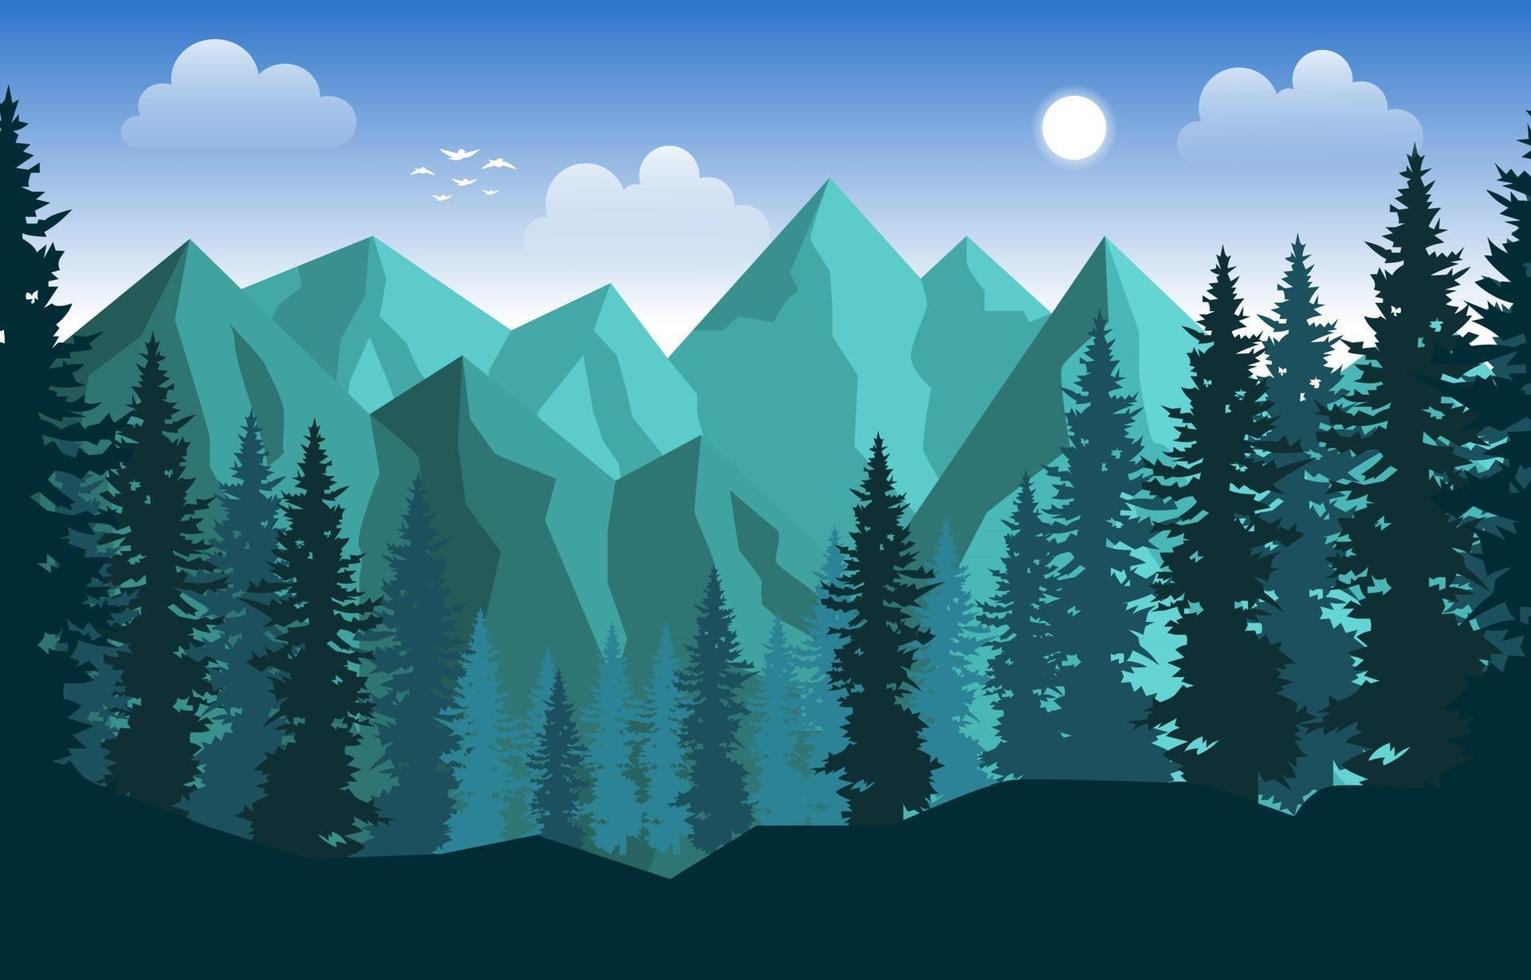 Mountain Peak Pine Fir Trees Nature Landscape Adventure Illustration vector